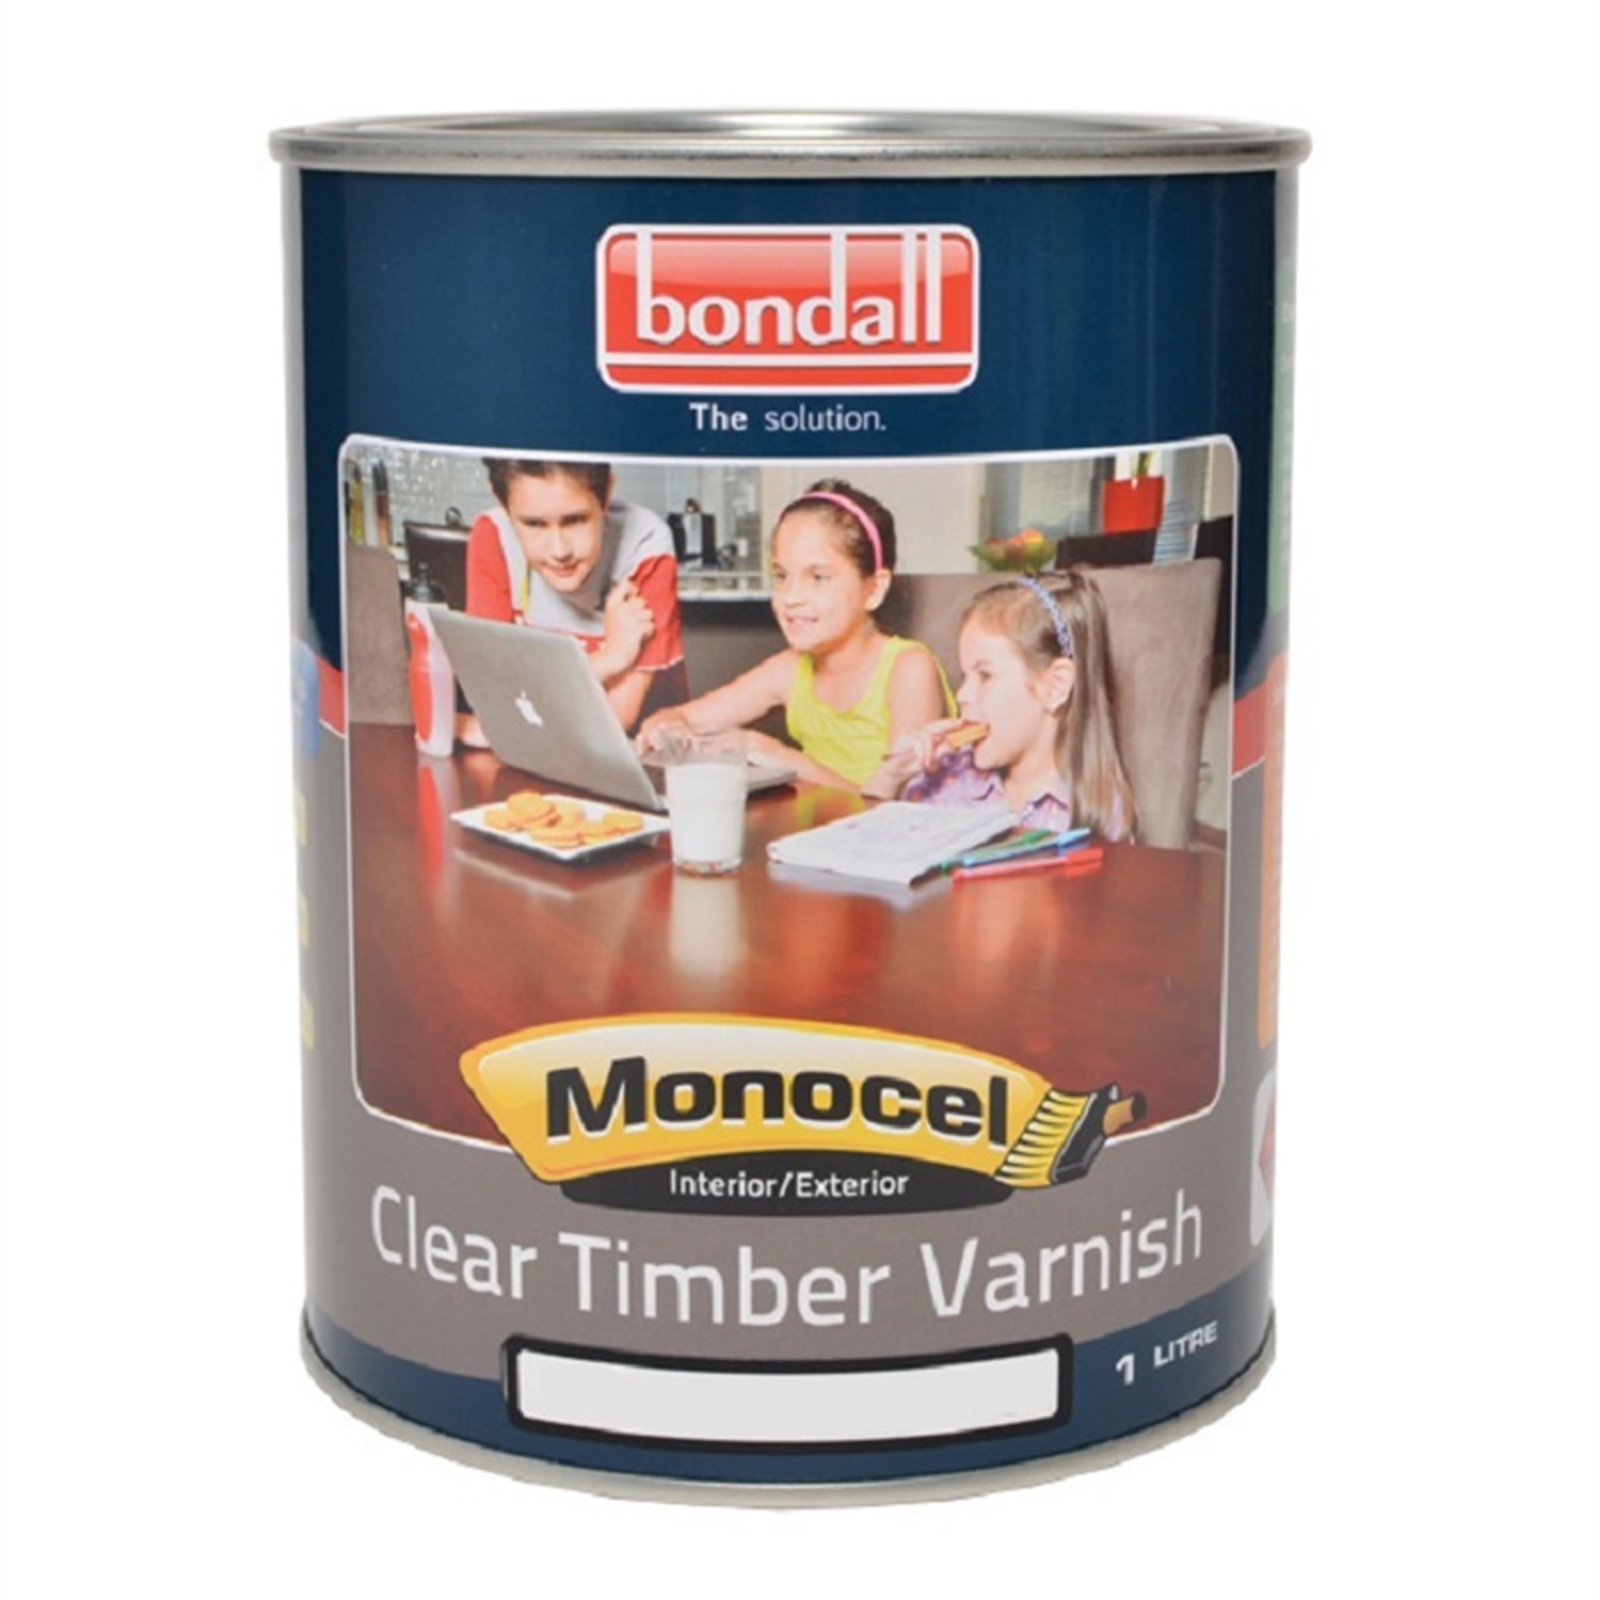 Bondall 1L Satin Monocel Clear Timber Varnish